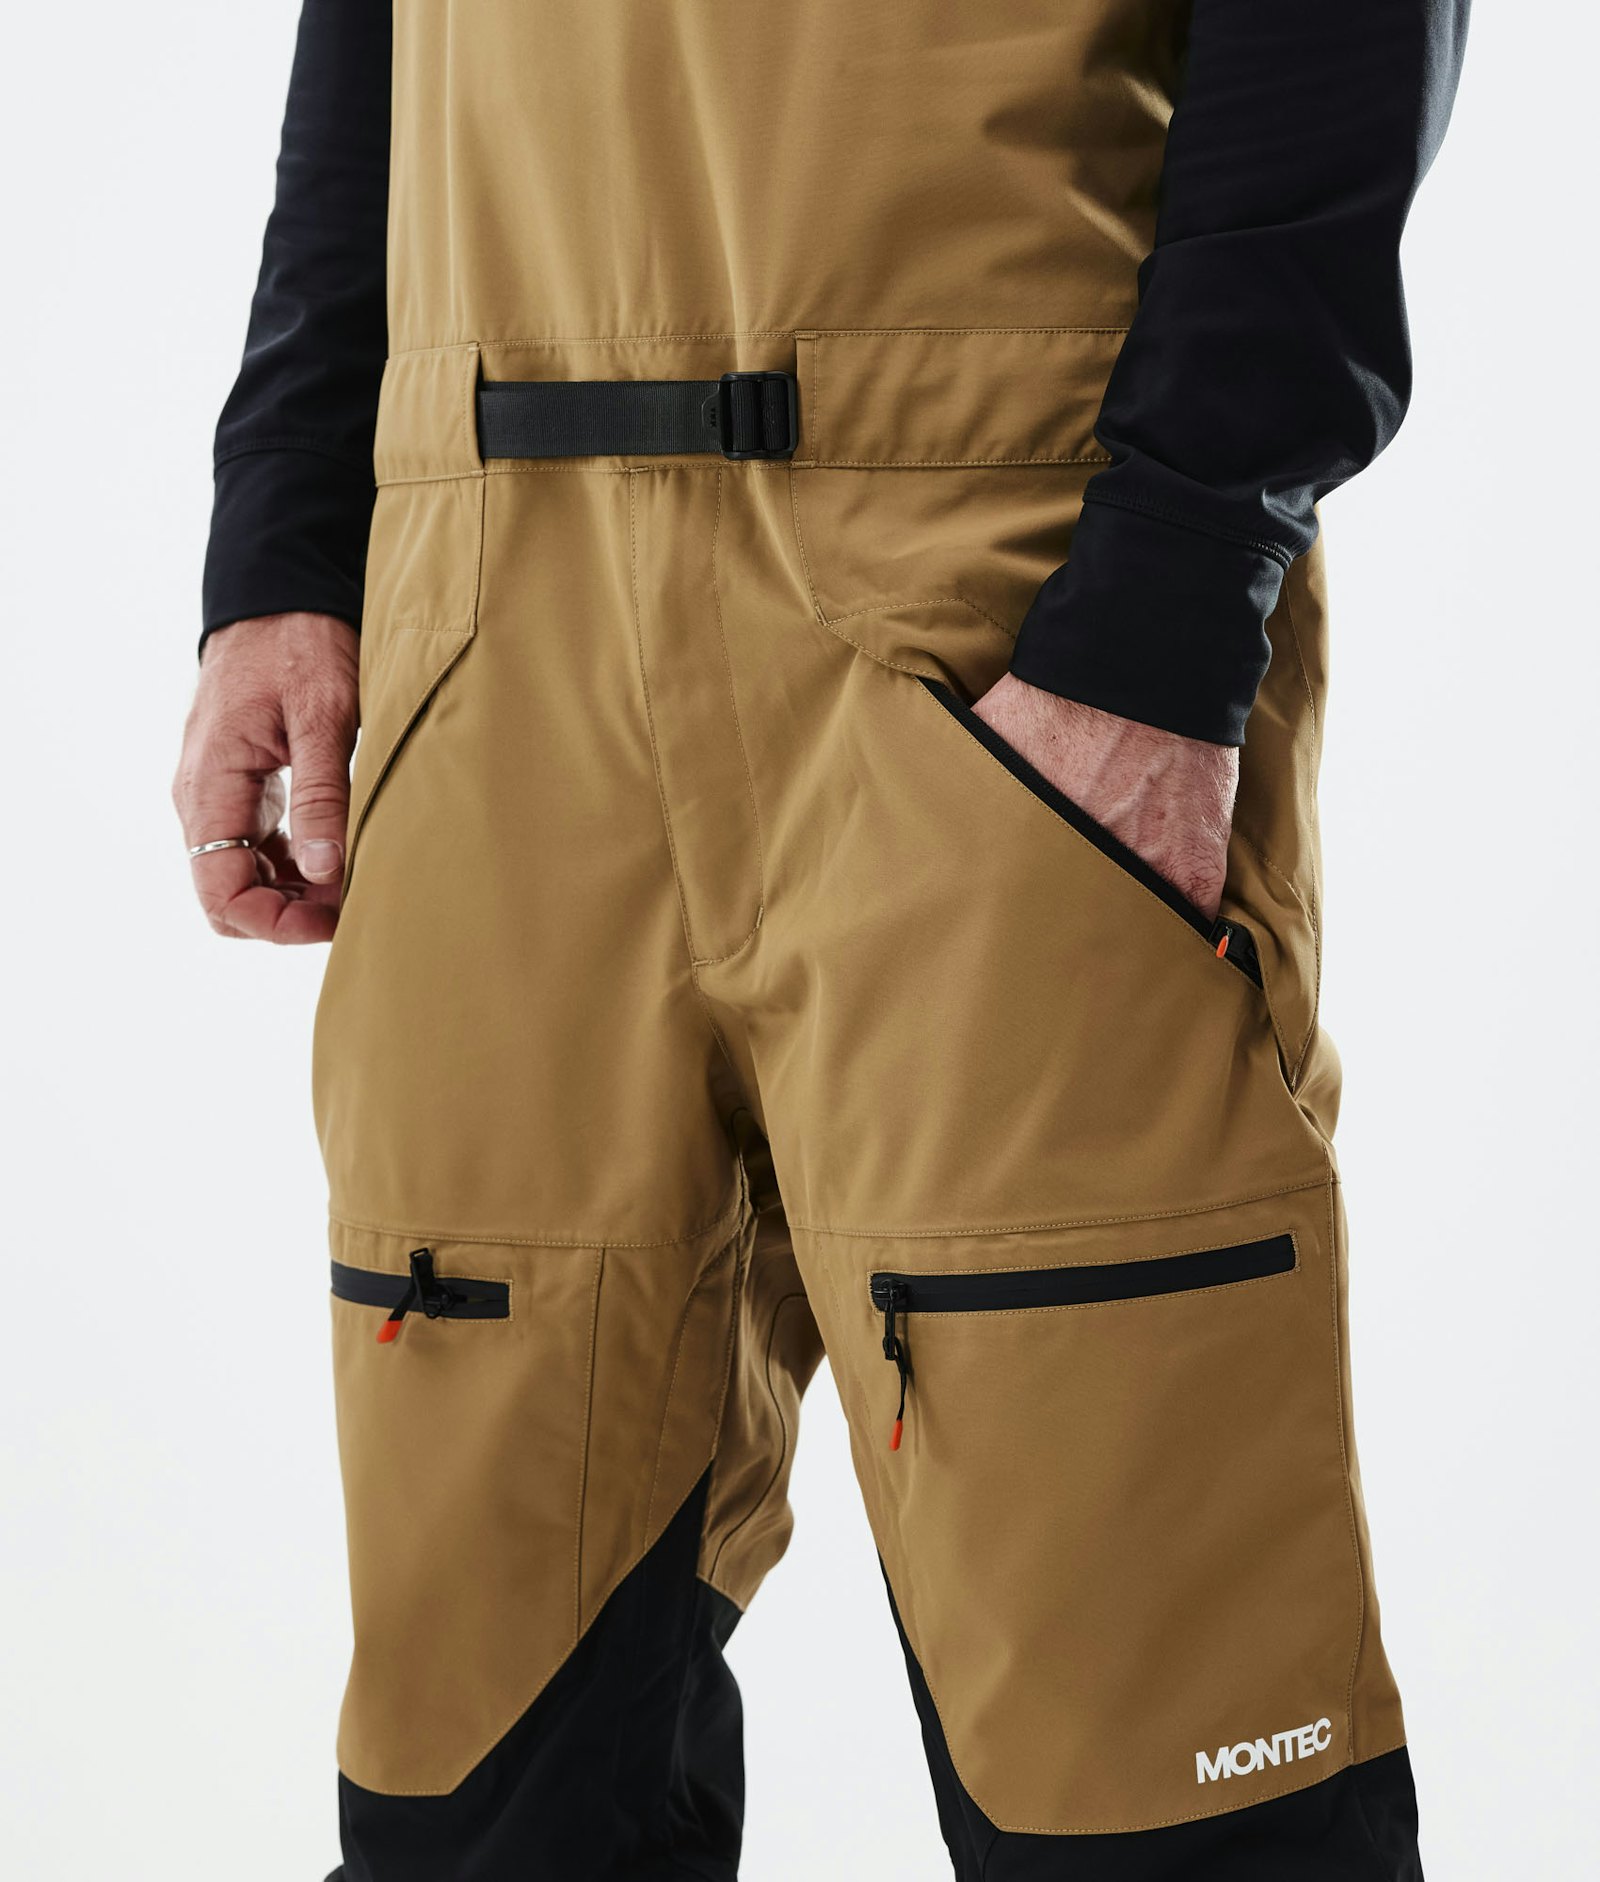 Moss 2021 Snowboard Pants Men Gold/Black Renewed